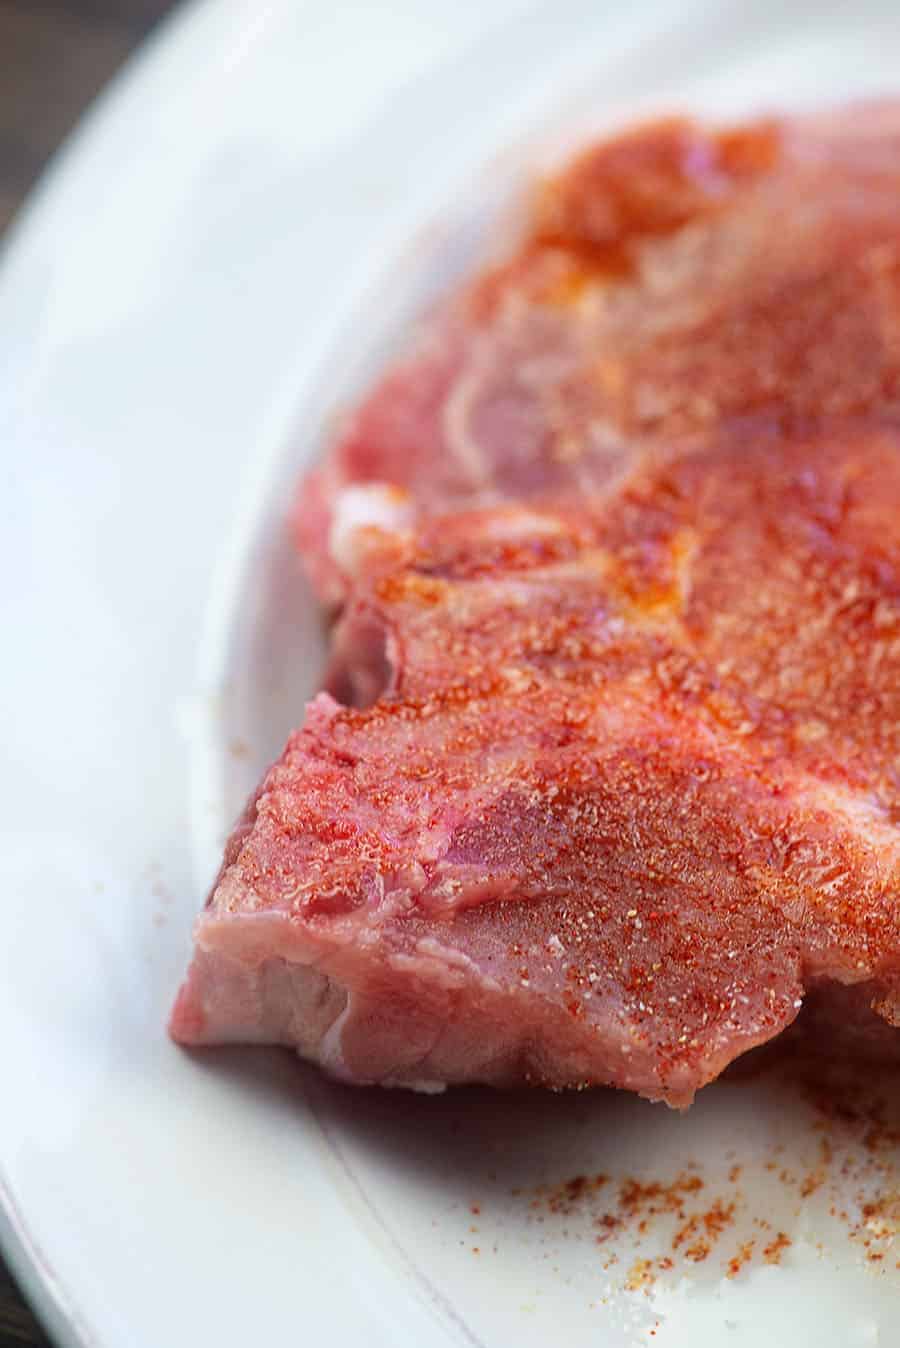 seasoned pork chops on a plate